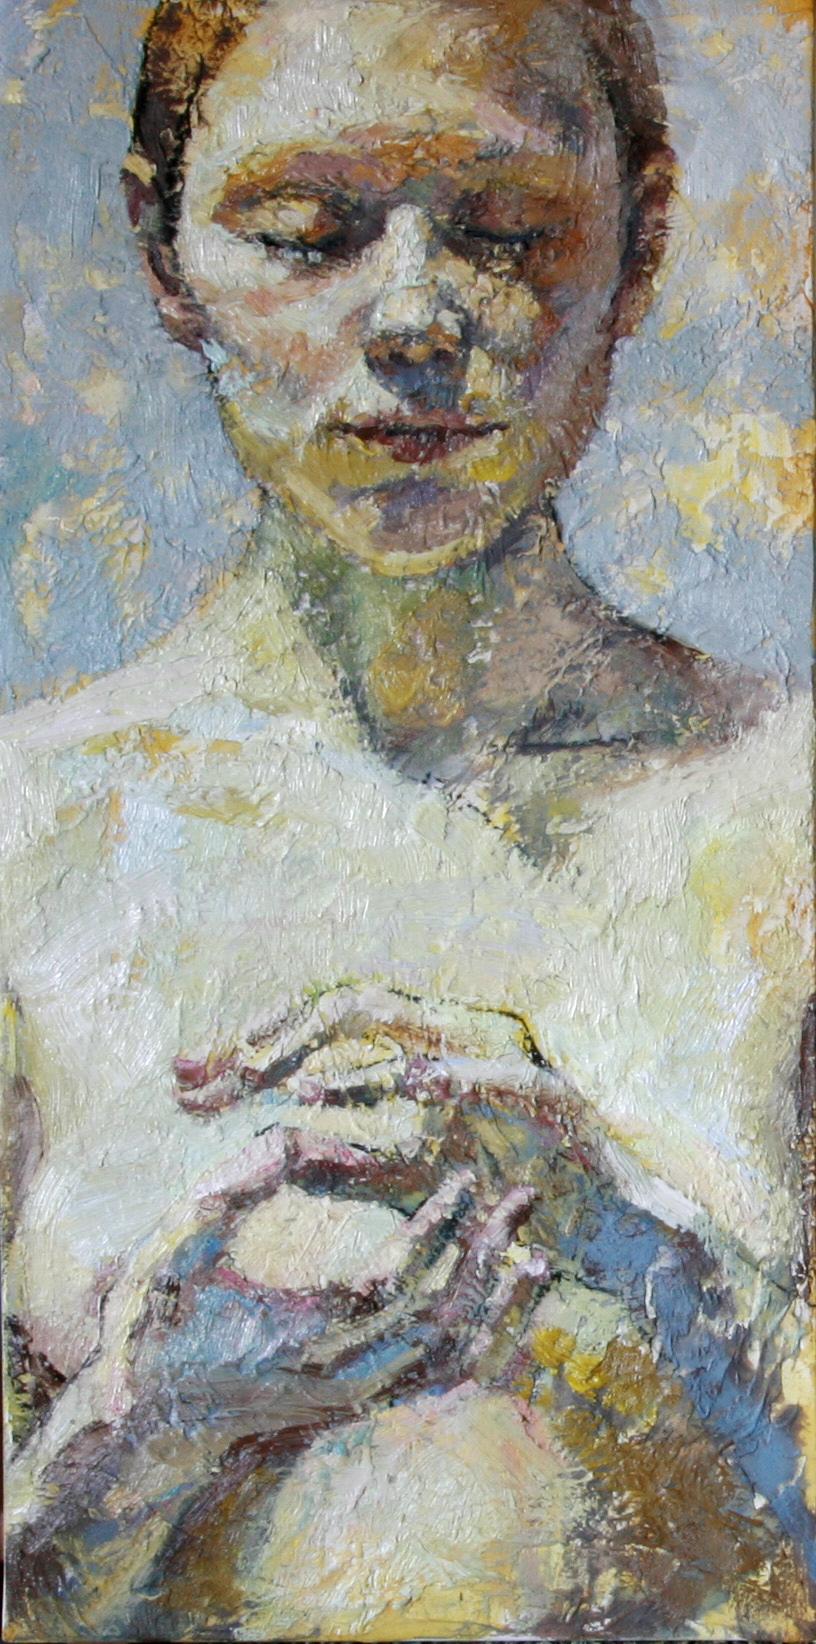 Montse Valdés Portrait Painting - 7-4-11 - 21st Century, Contemporary, Nude Painting, Oil on Canvas